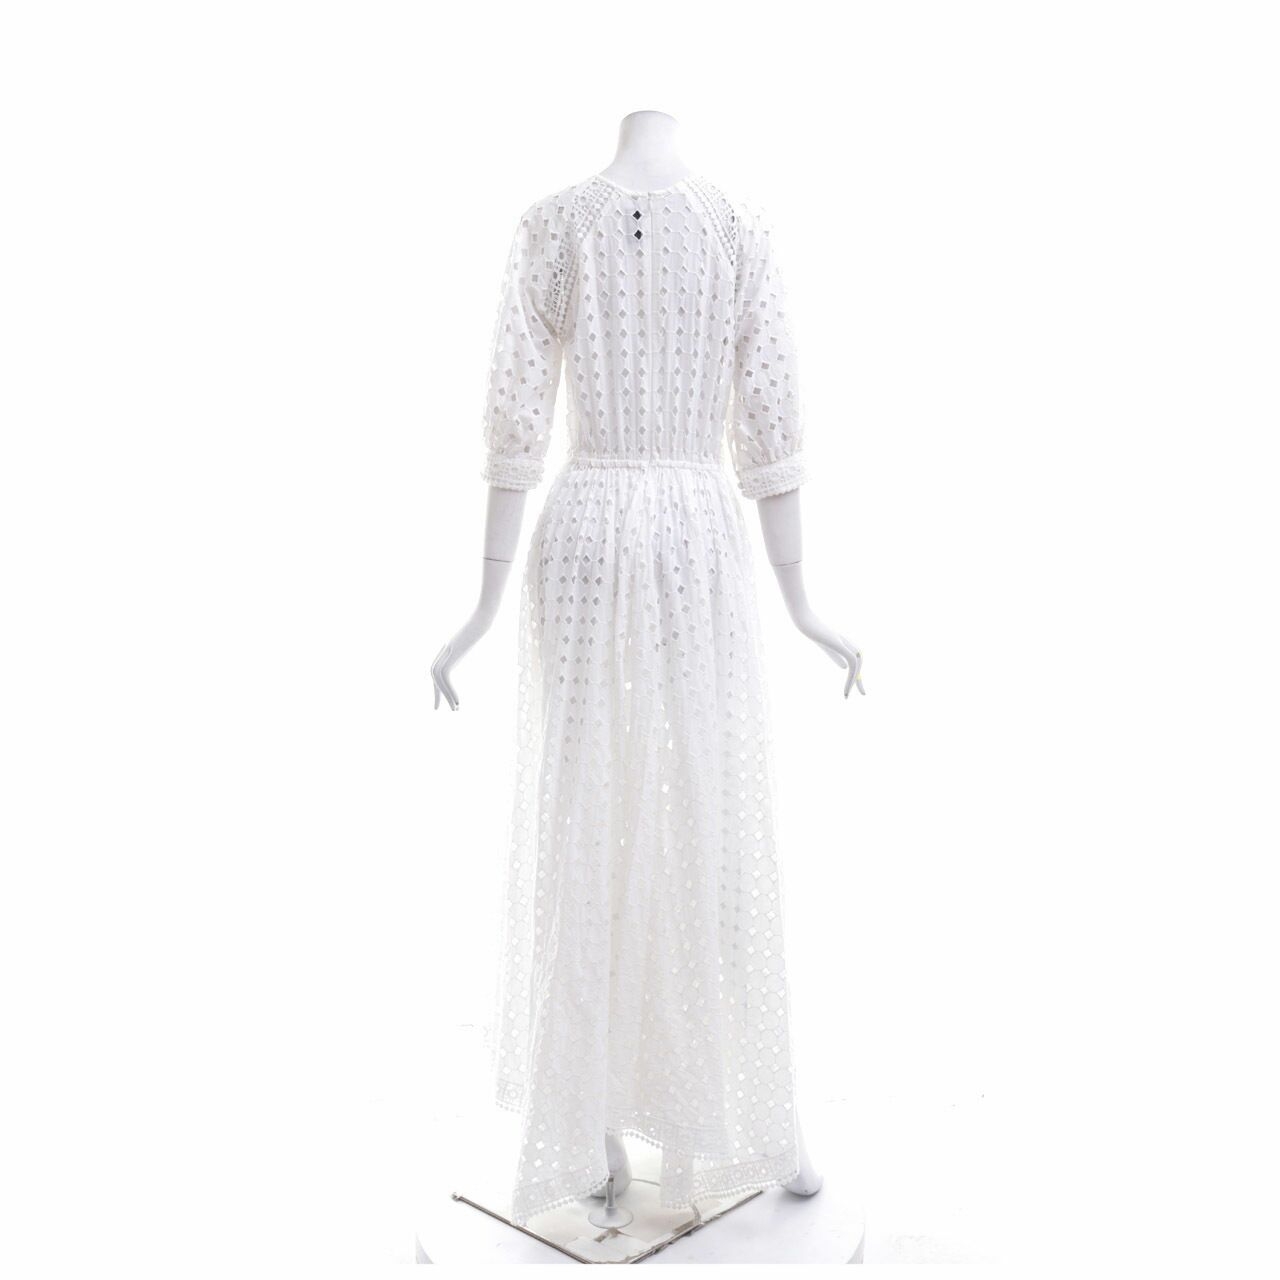 Barli Asmara White Perforated Long Dress